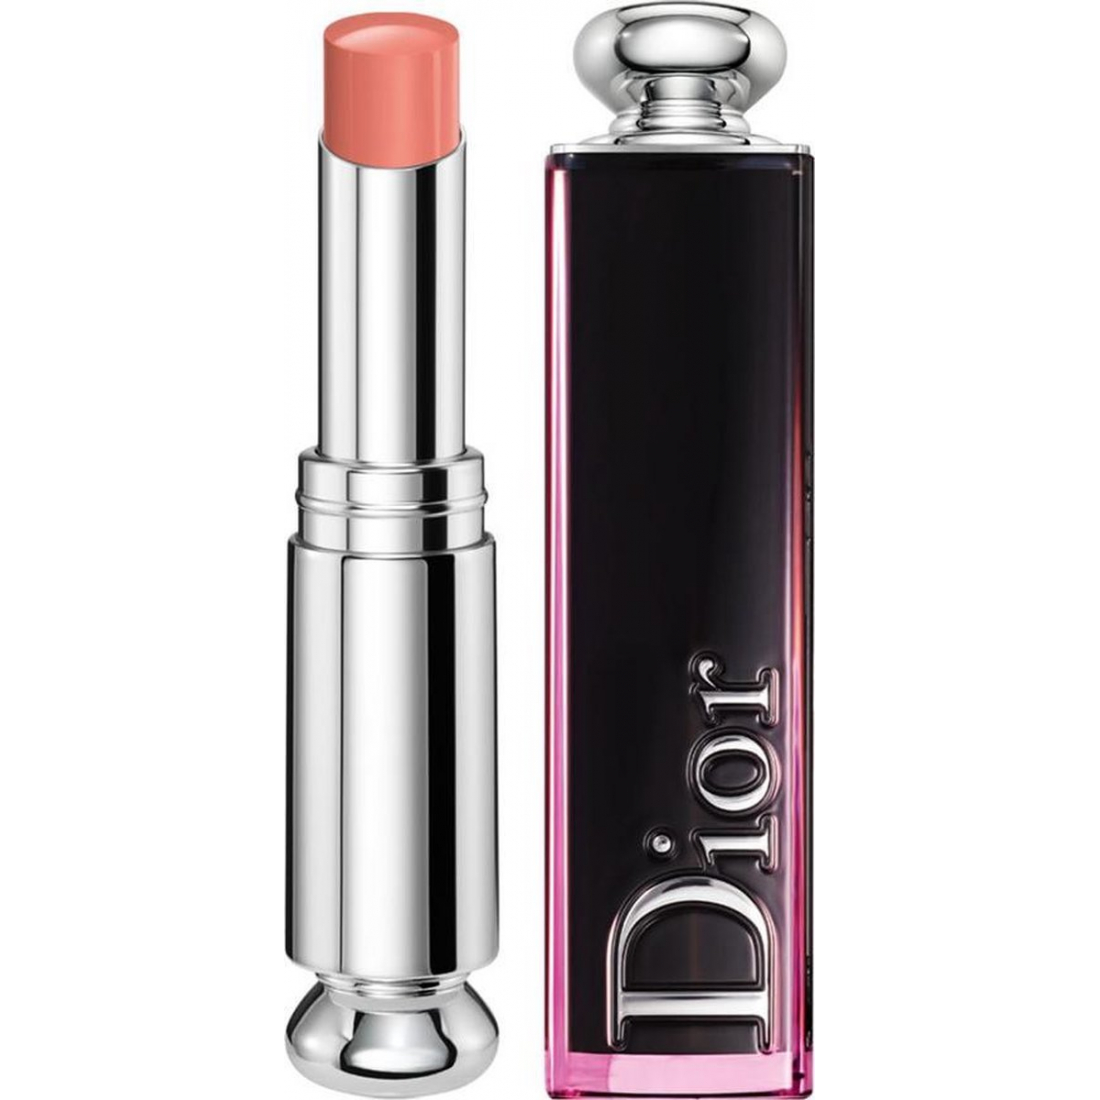 'Dior Addict' Lippenstift - 344 Rowling 3.2 g